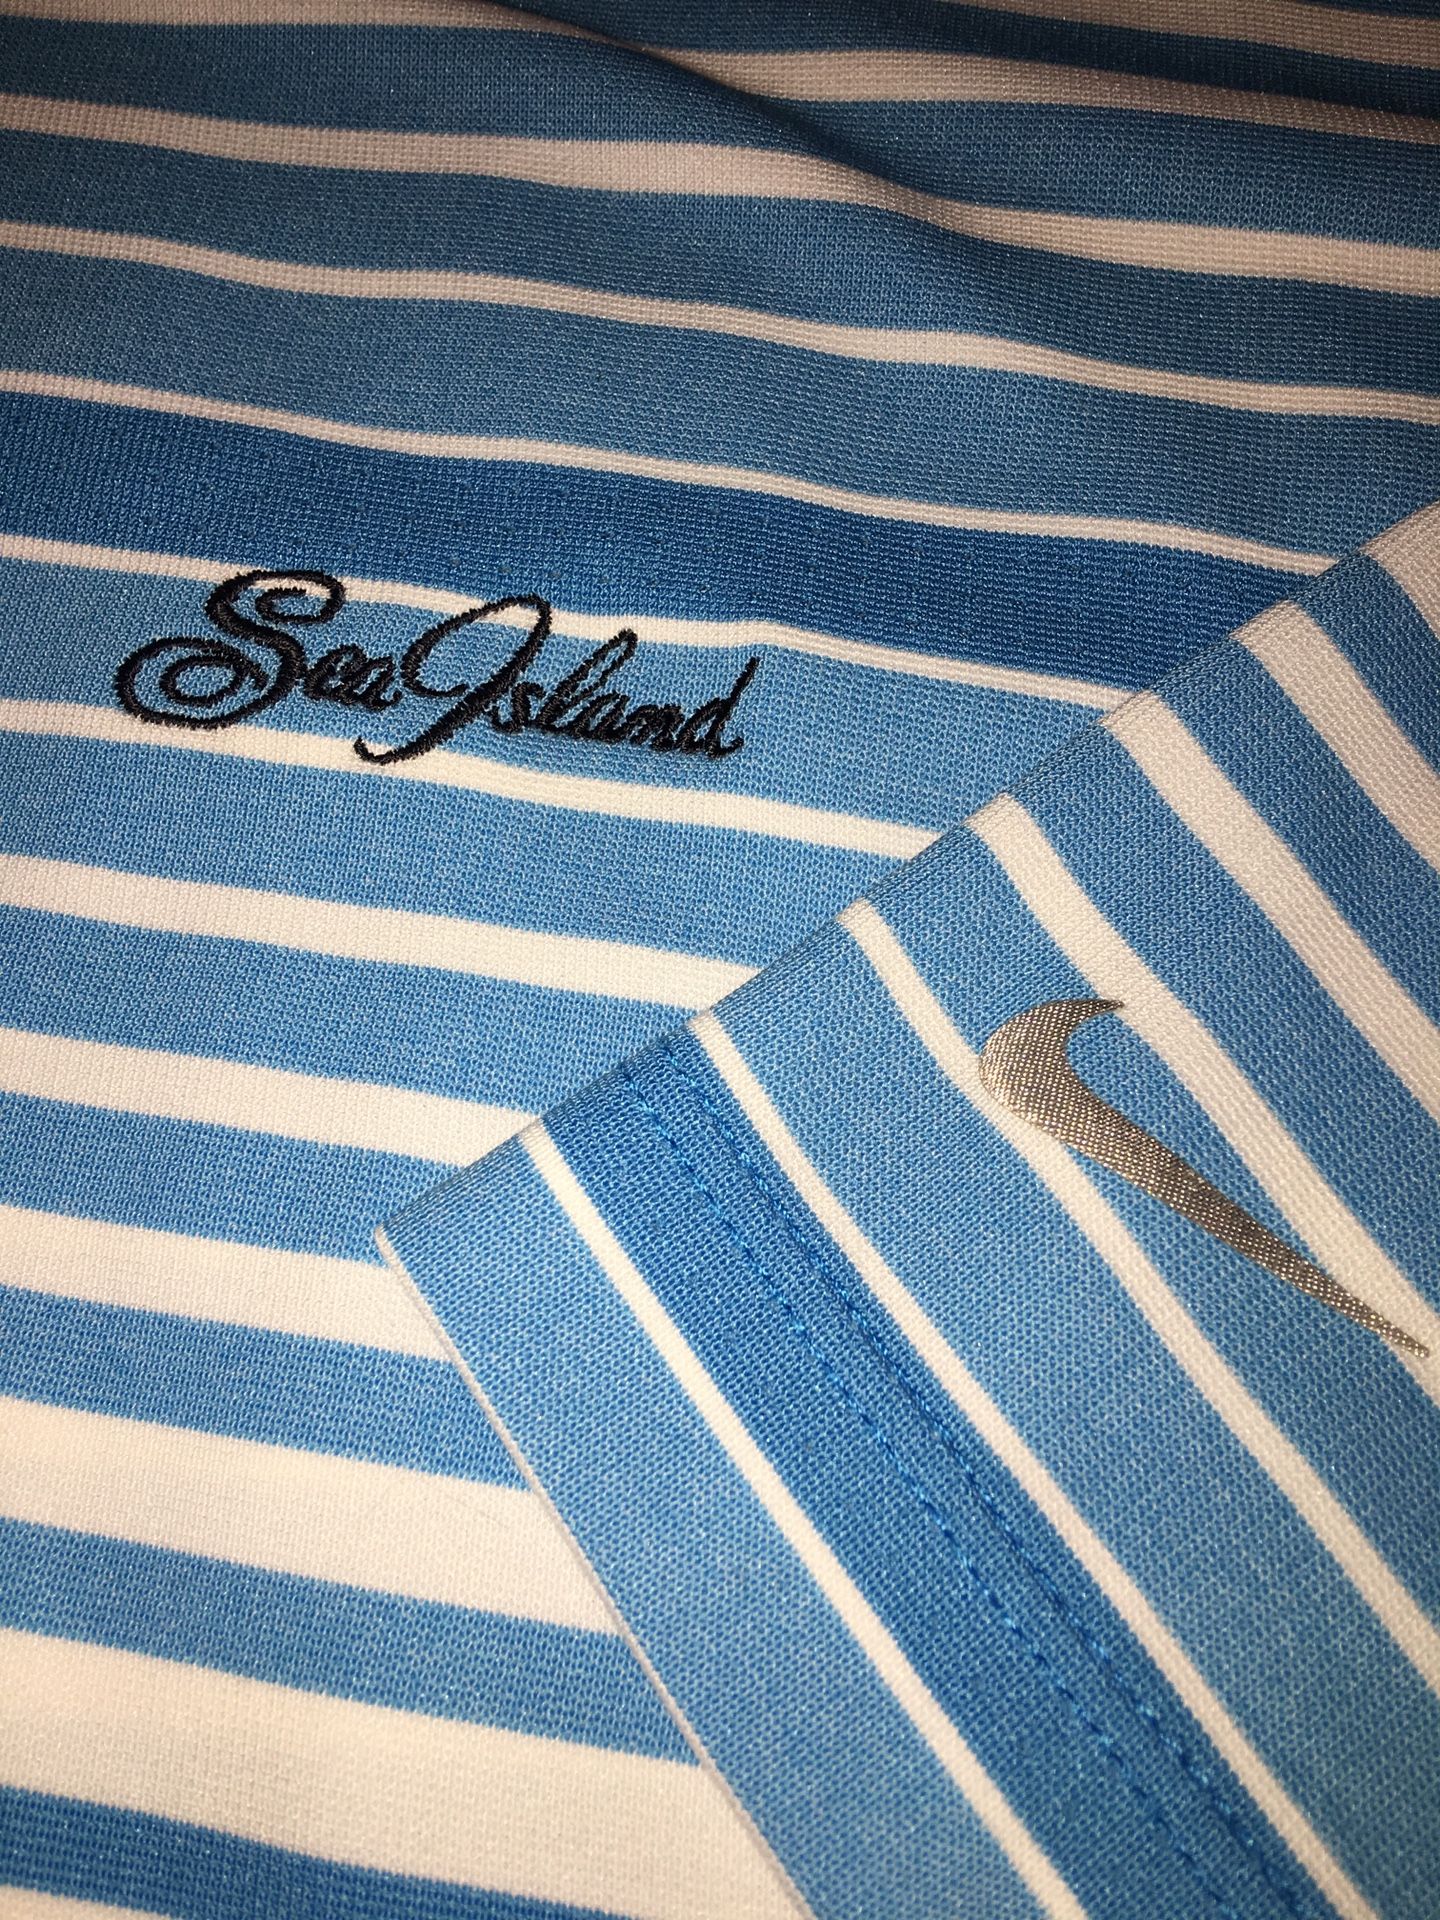 Nike Golf Shirt, Sea Island Golf Club, St. Simons Island, GA, Extra Large, $10